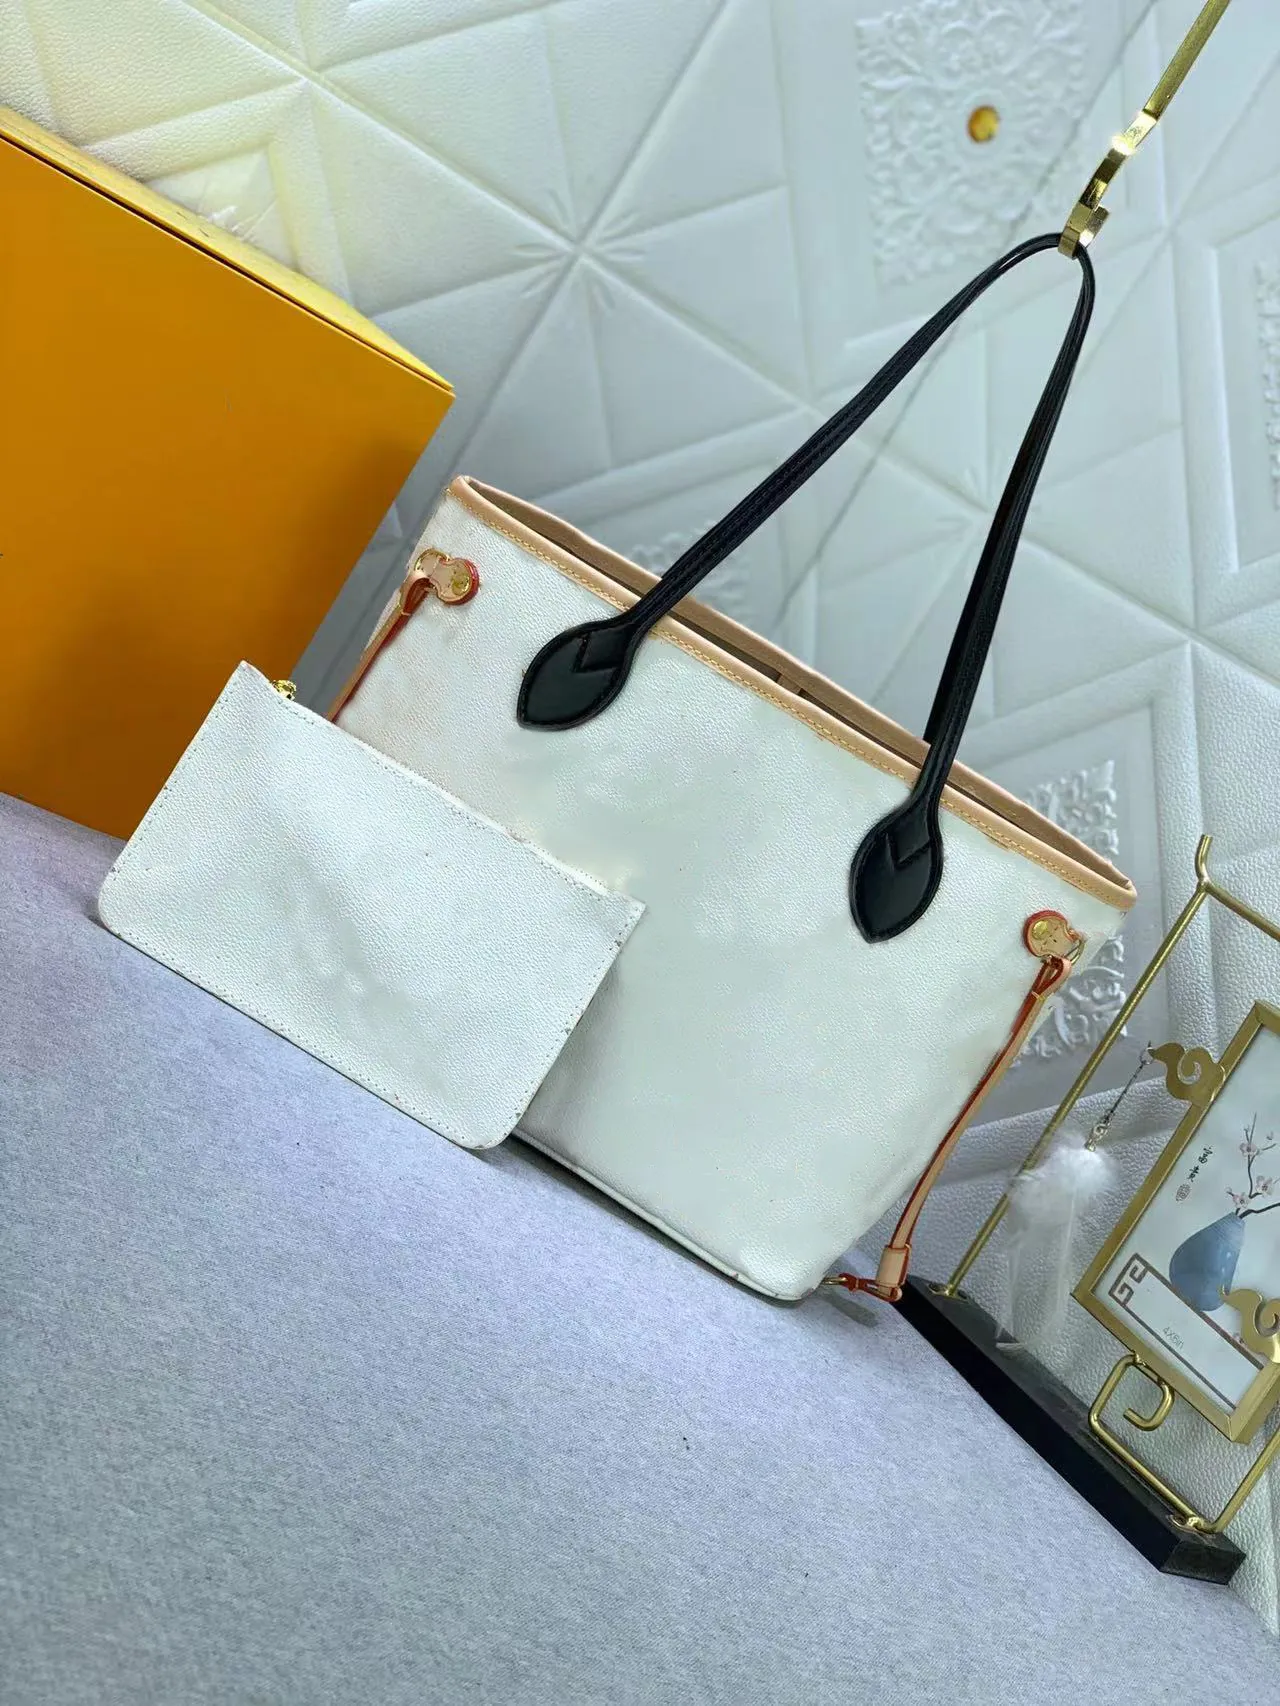 NEW Fashion Classic Bag Handbag Women Leather Handbags Womens Crossbody VINTAGE Clutch Tote Shoulder Eming Messenger Bags #3333366666888